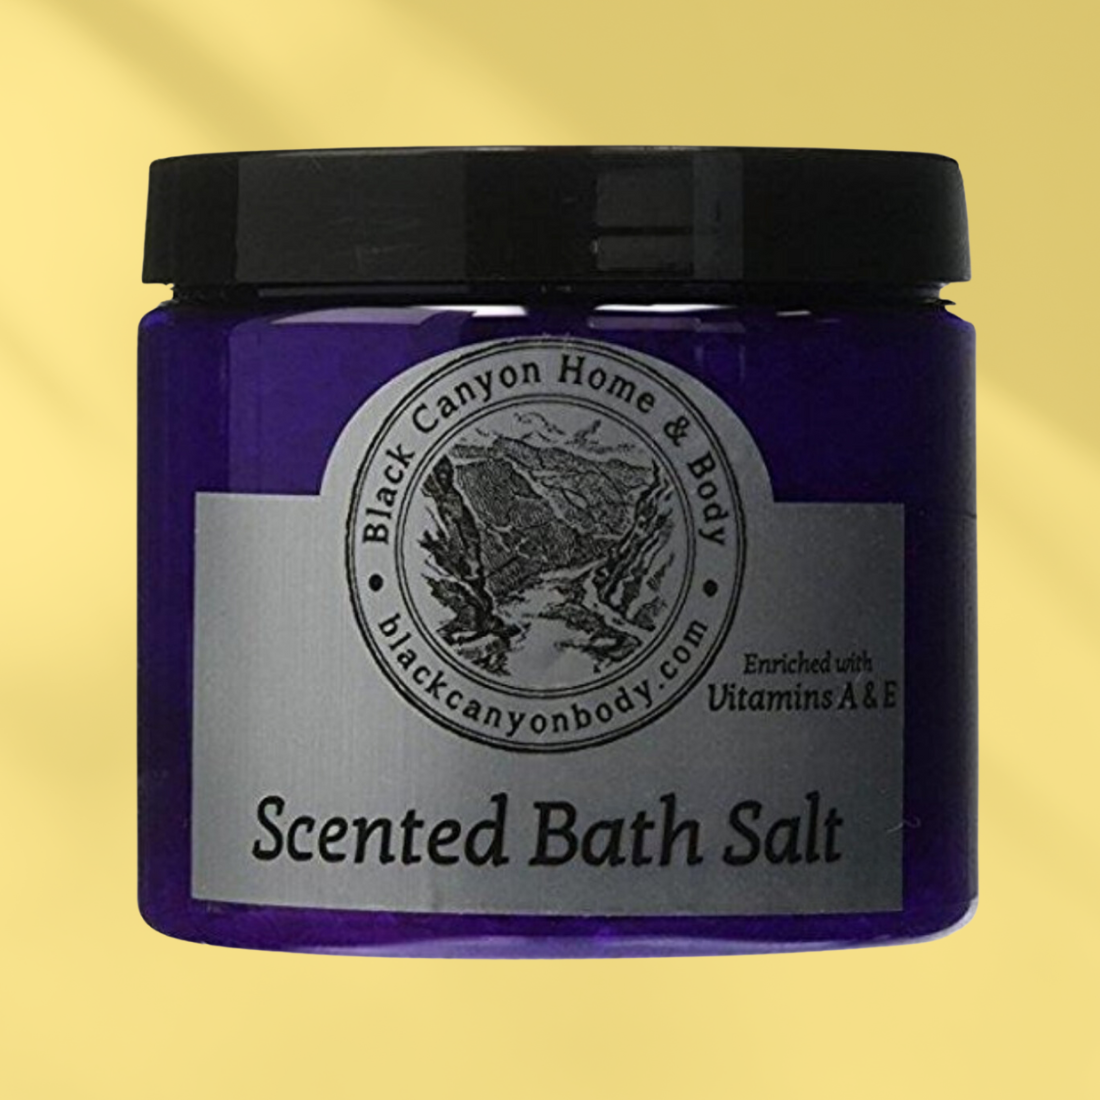 Black Canyon Winter Festival Scented Epsom Salt Bath Soak